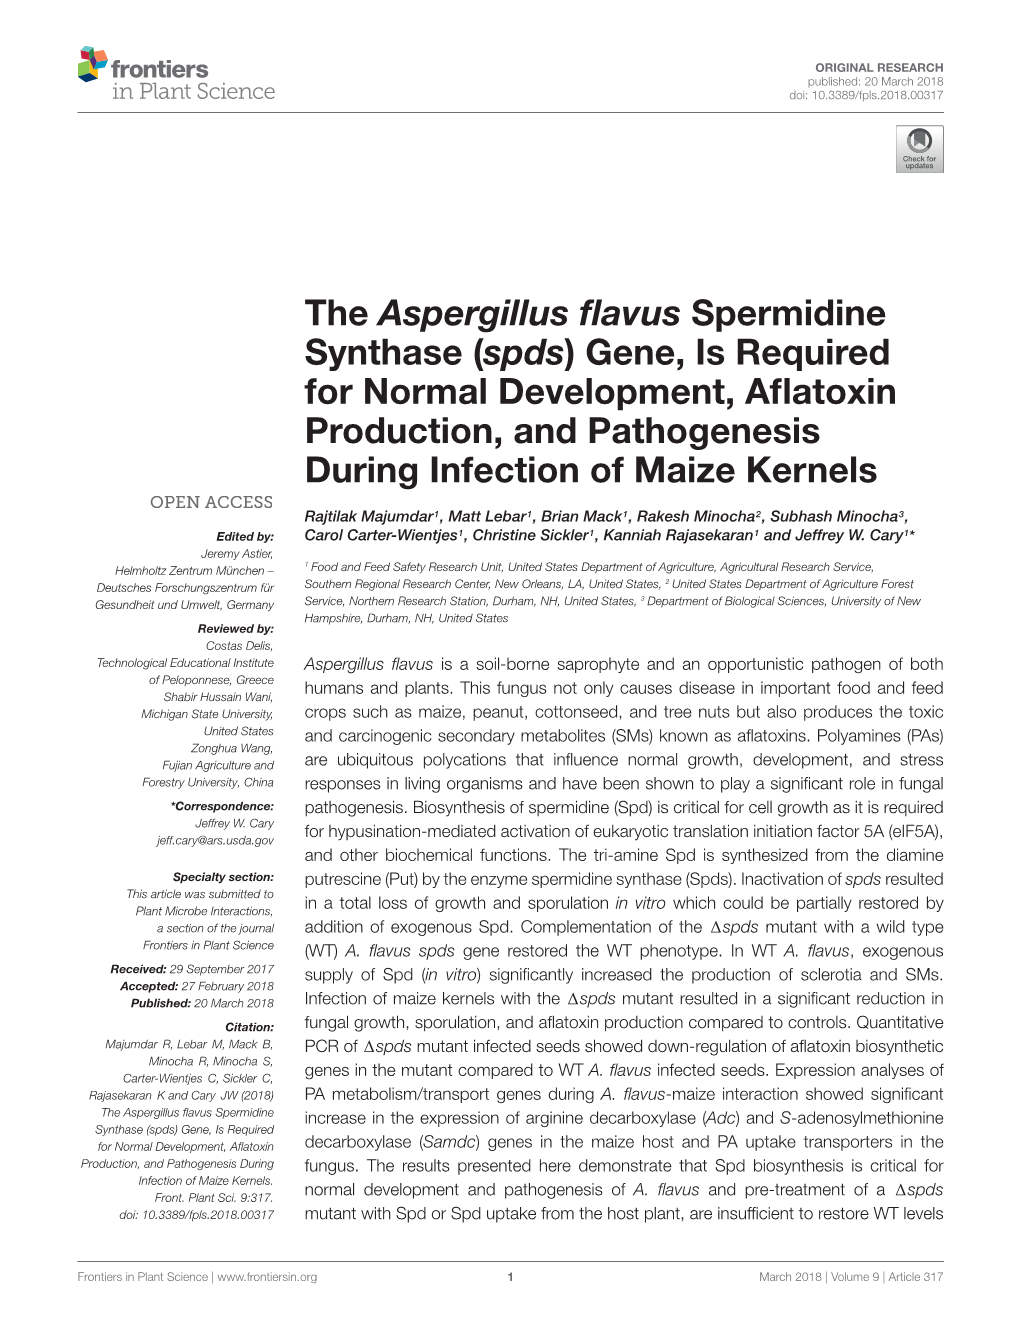 The Aspergillus Flavus Spermidine Synthase (Spds) Gene, Is Required